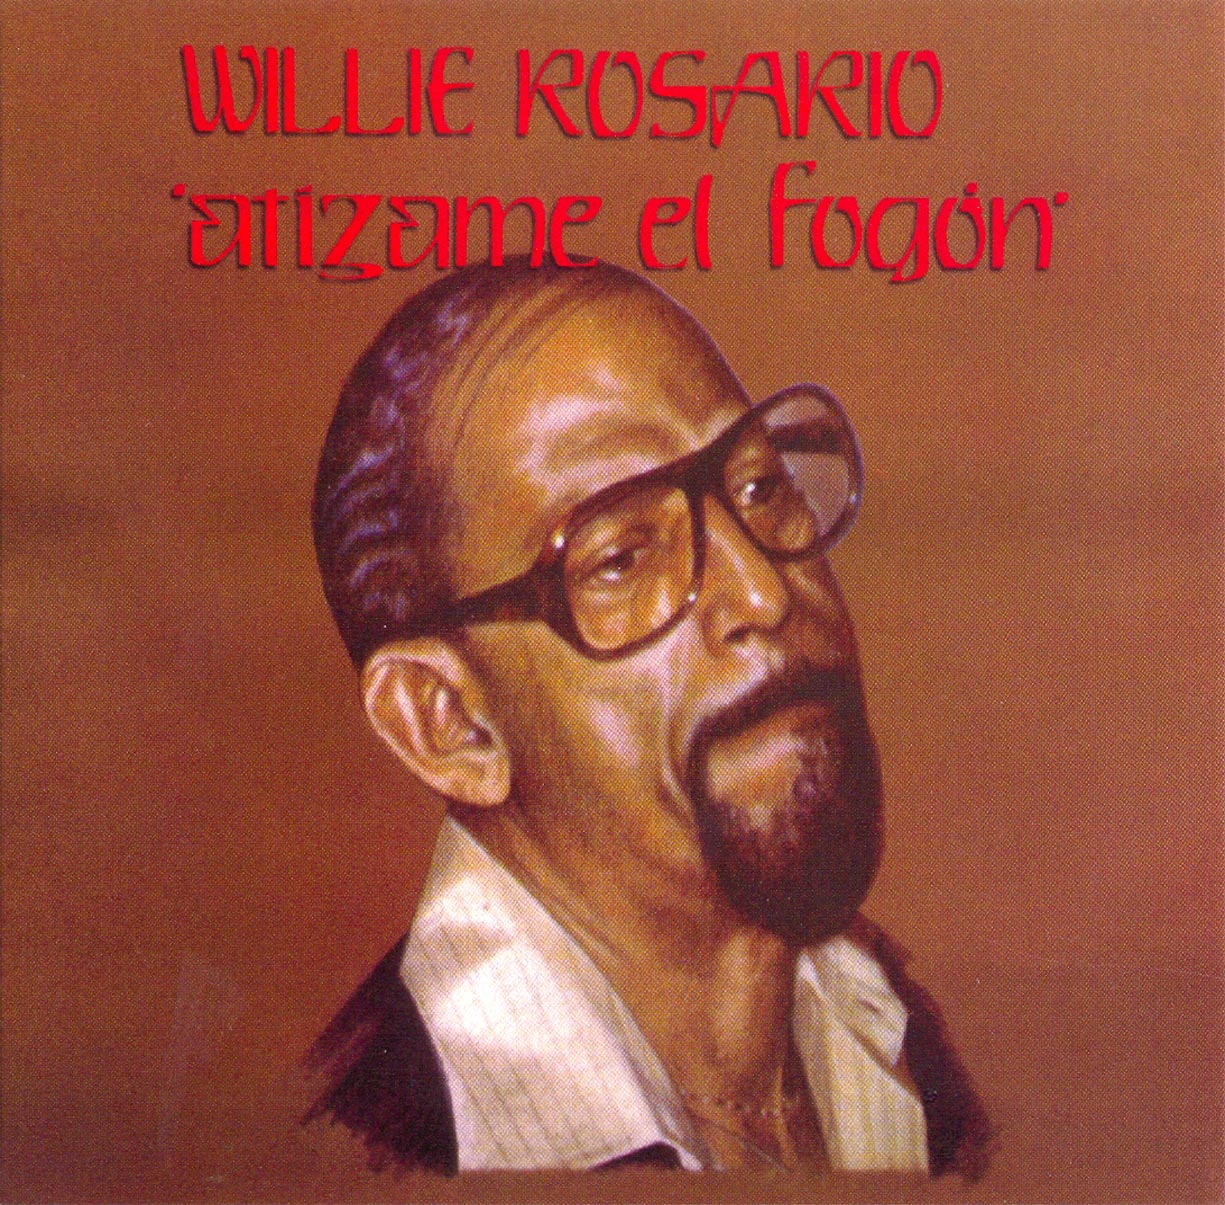 WILLIE ROSARIO - ATIZAME EL FOGON